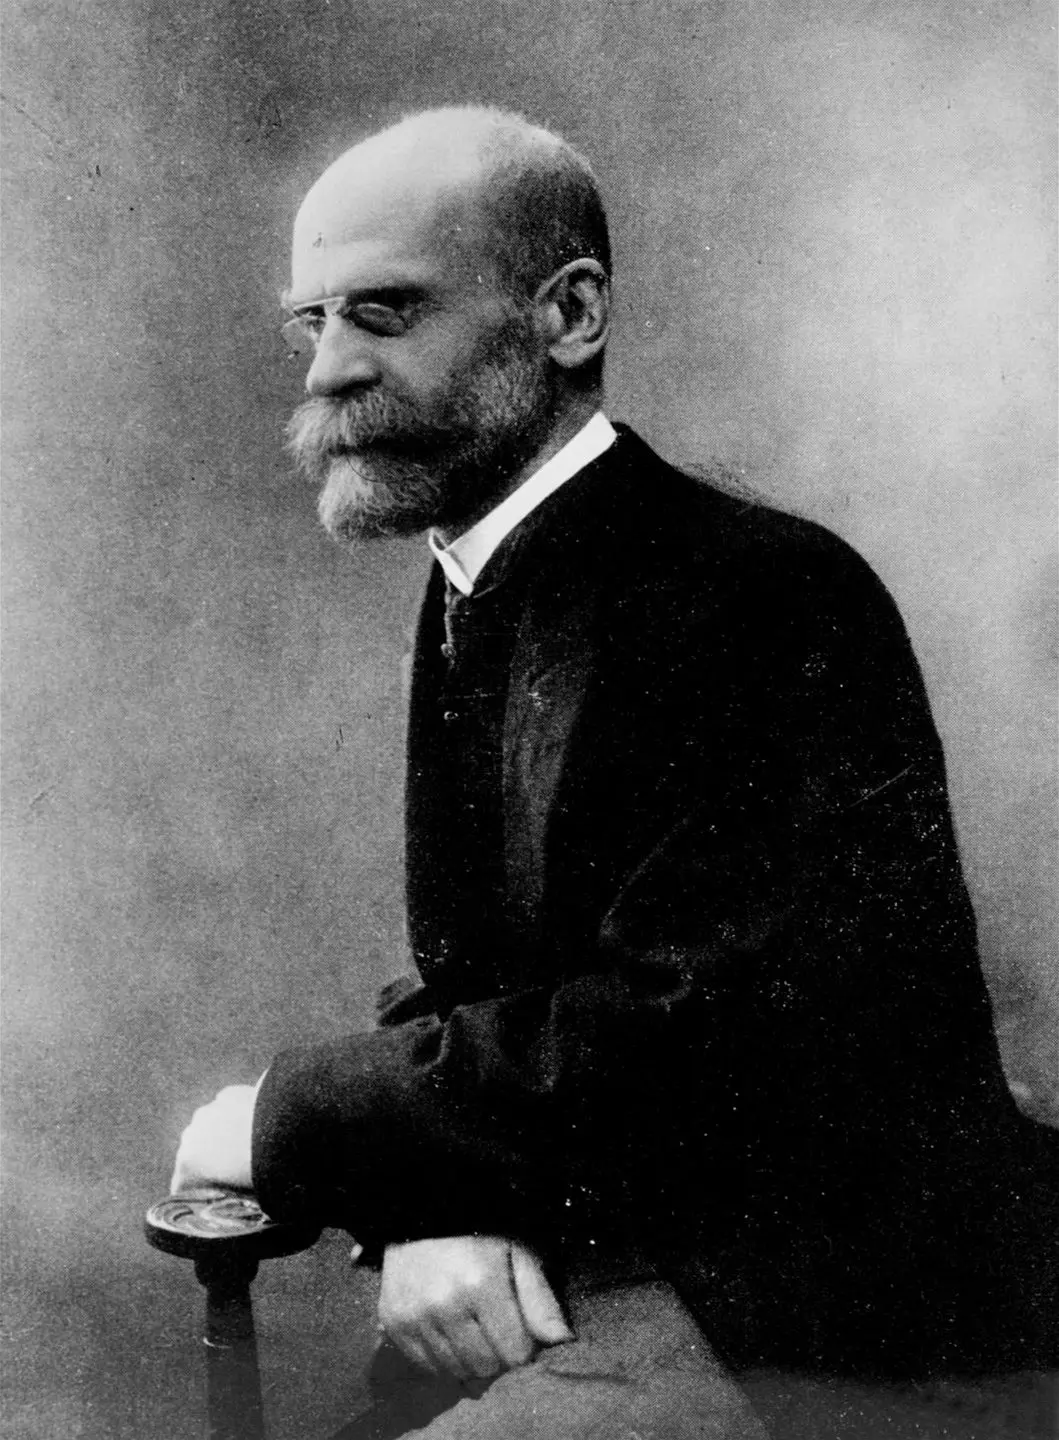 biografia resumida de durkheim - Qué defendia Durkheim